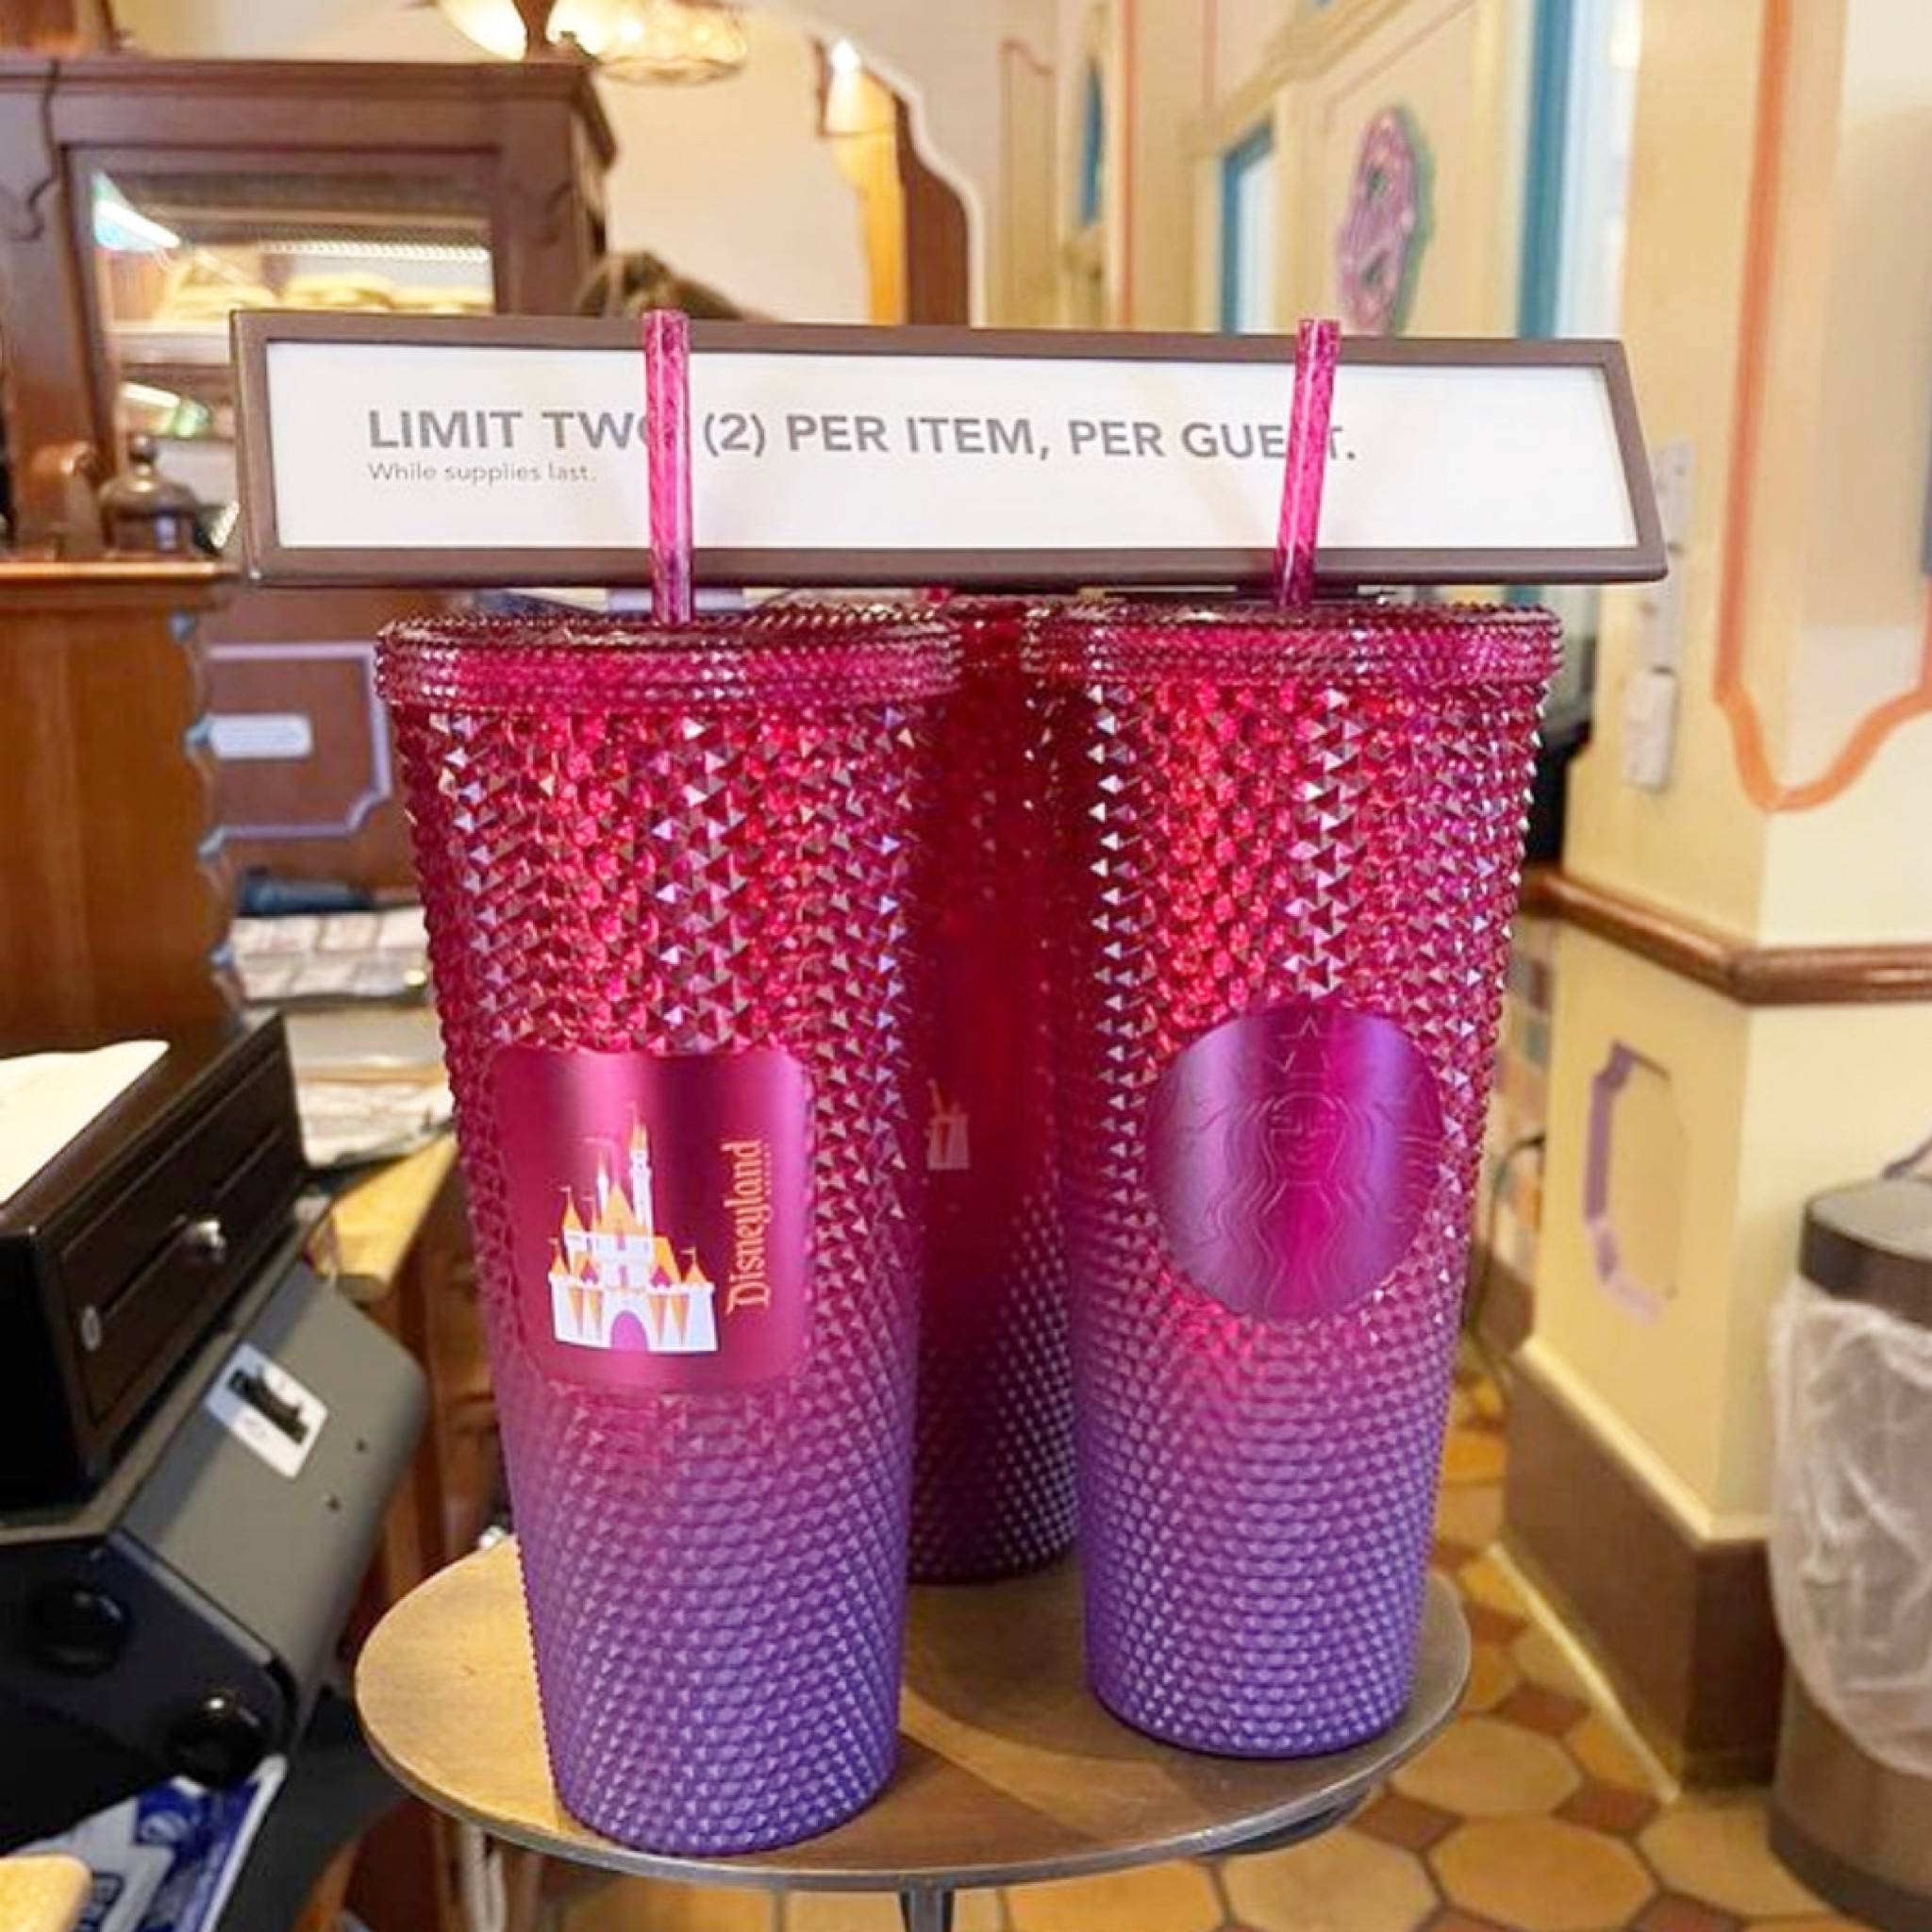 PHOTOS: Starbucks' Popular Pink Tumbler Has Made Its Way to Disneyland!